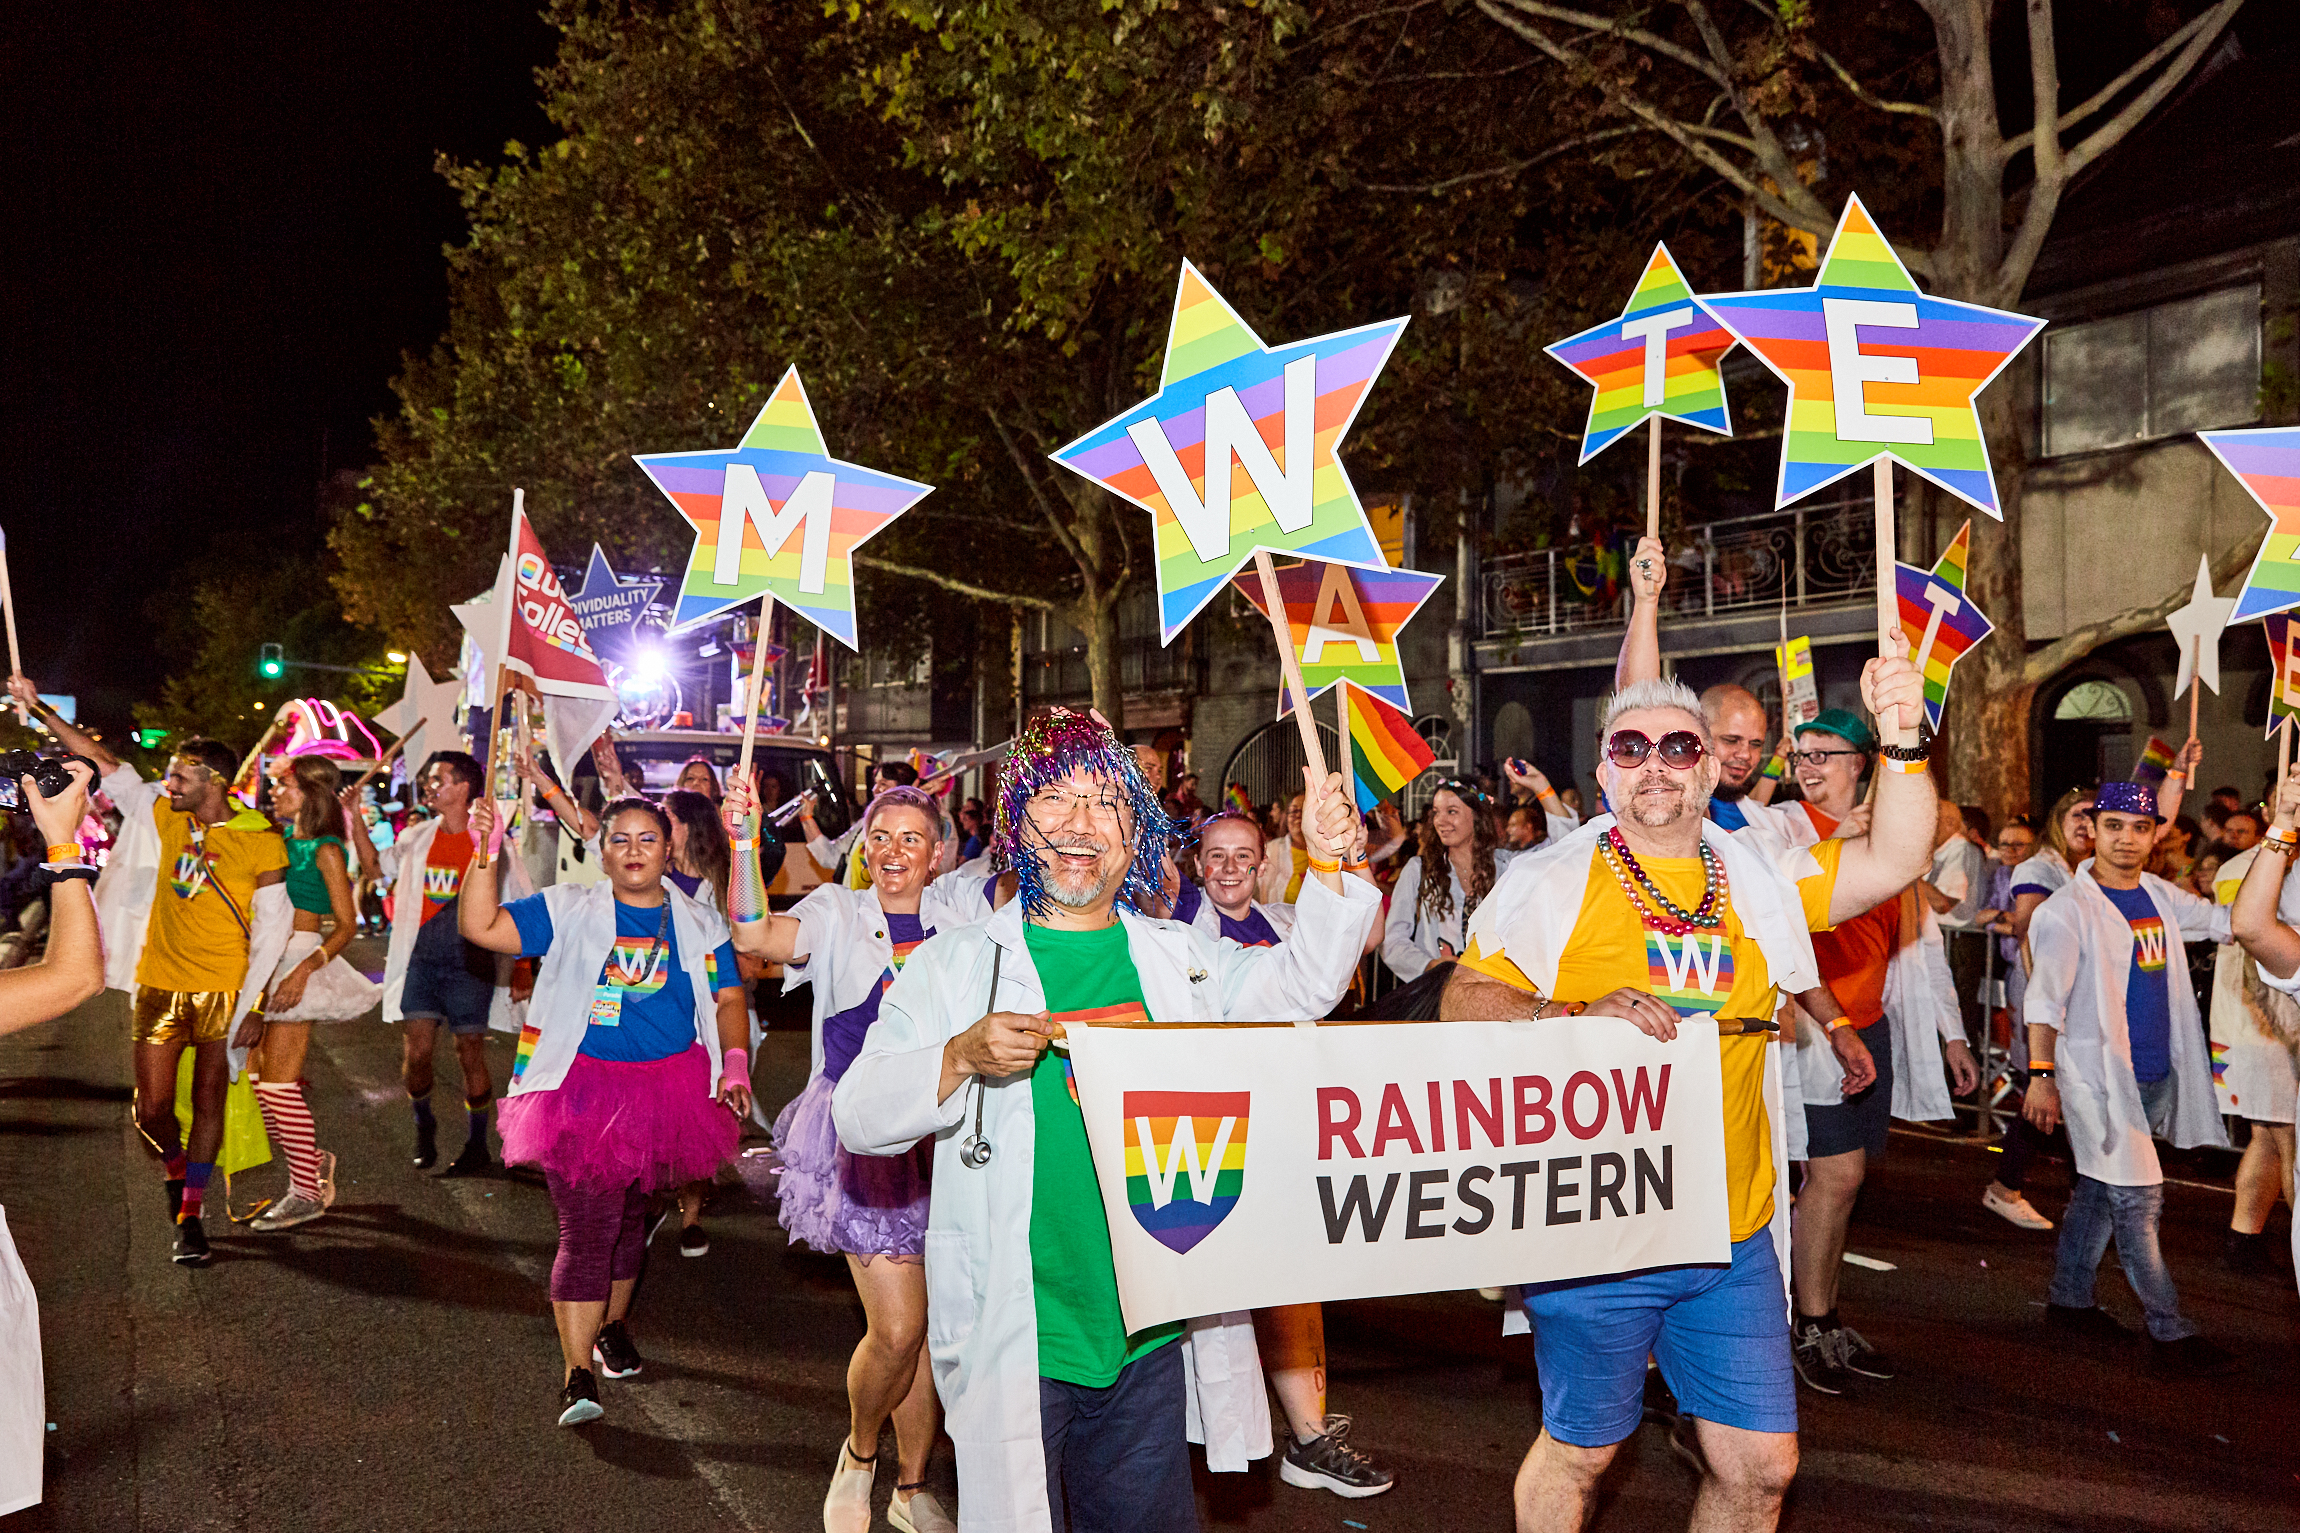 Rainbow Western in 2020 Mardi Gras Parade